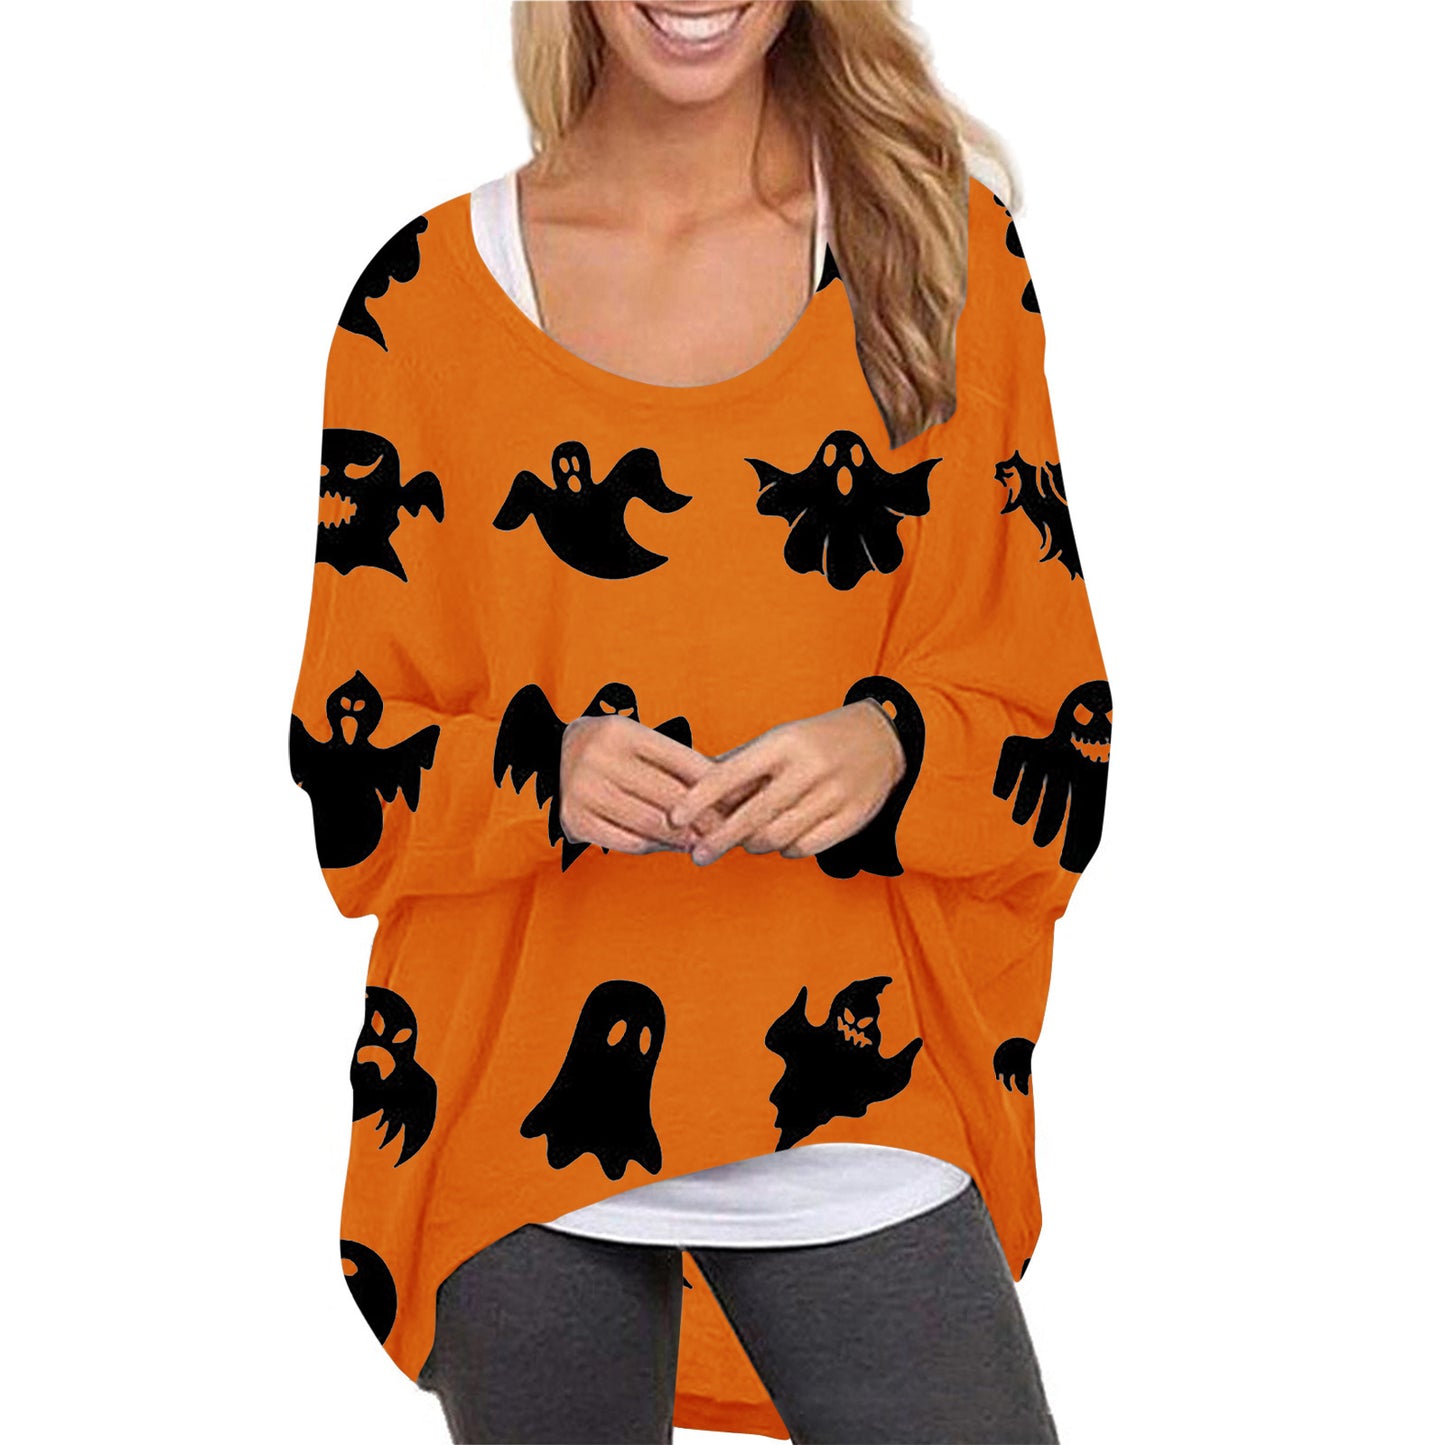 Women Halloween Pumpkin Print Long Sleeves Tops-For Halloween-Free Shipping at meselling99